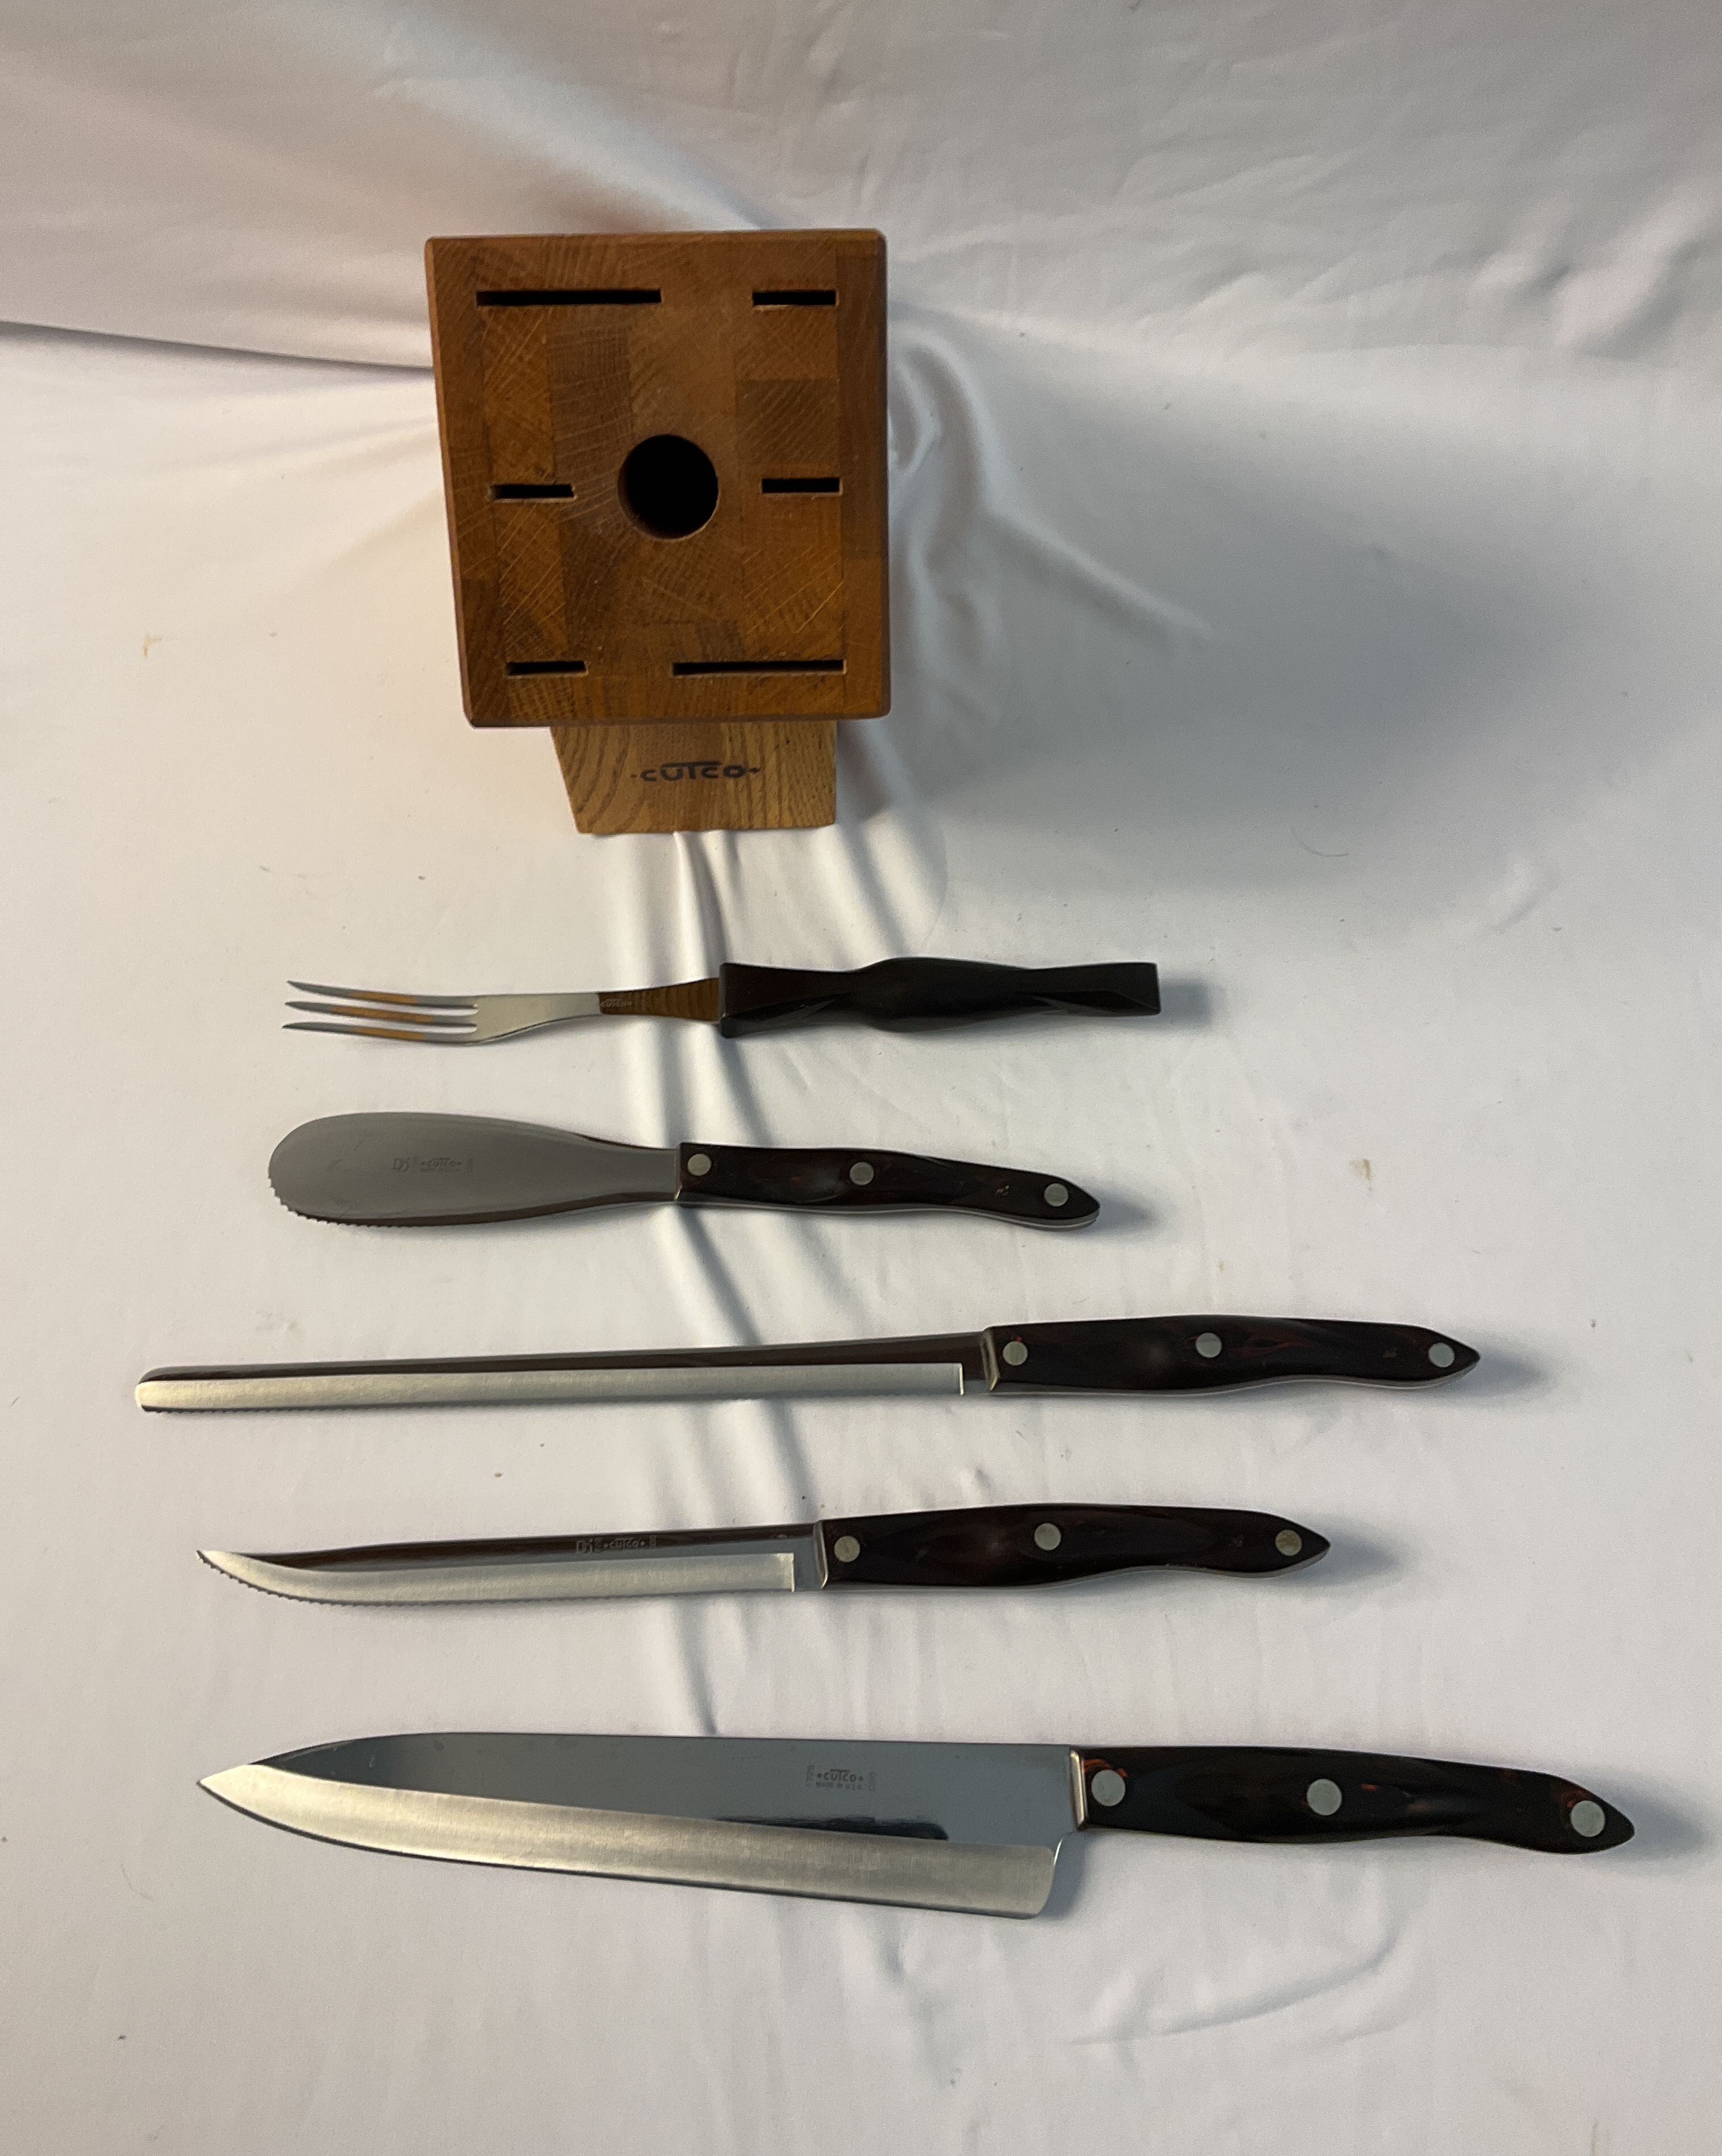 Sold at Auction: Vintage Cutco Knife Set